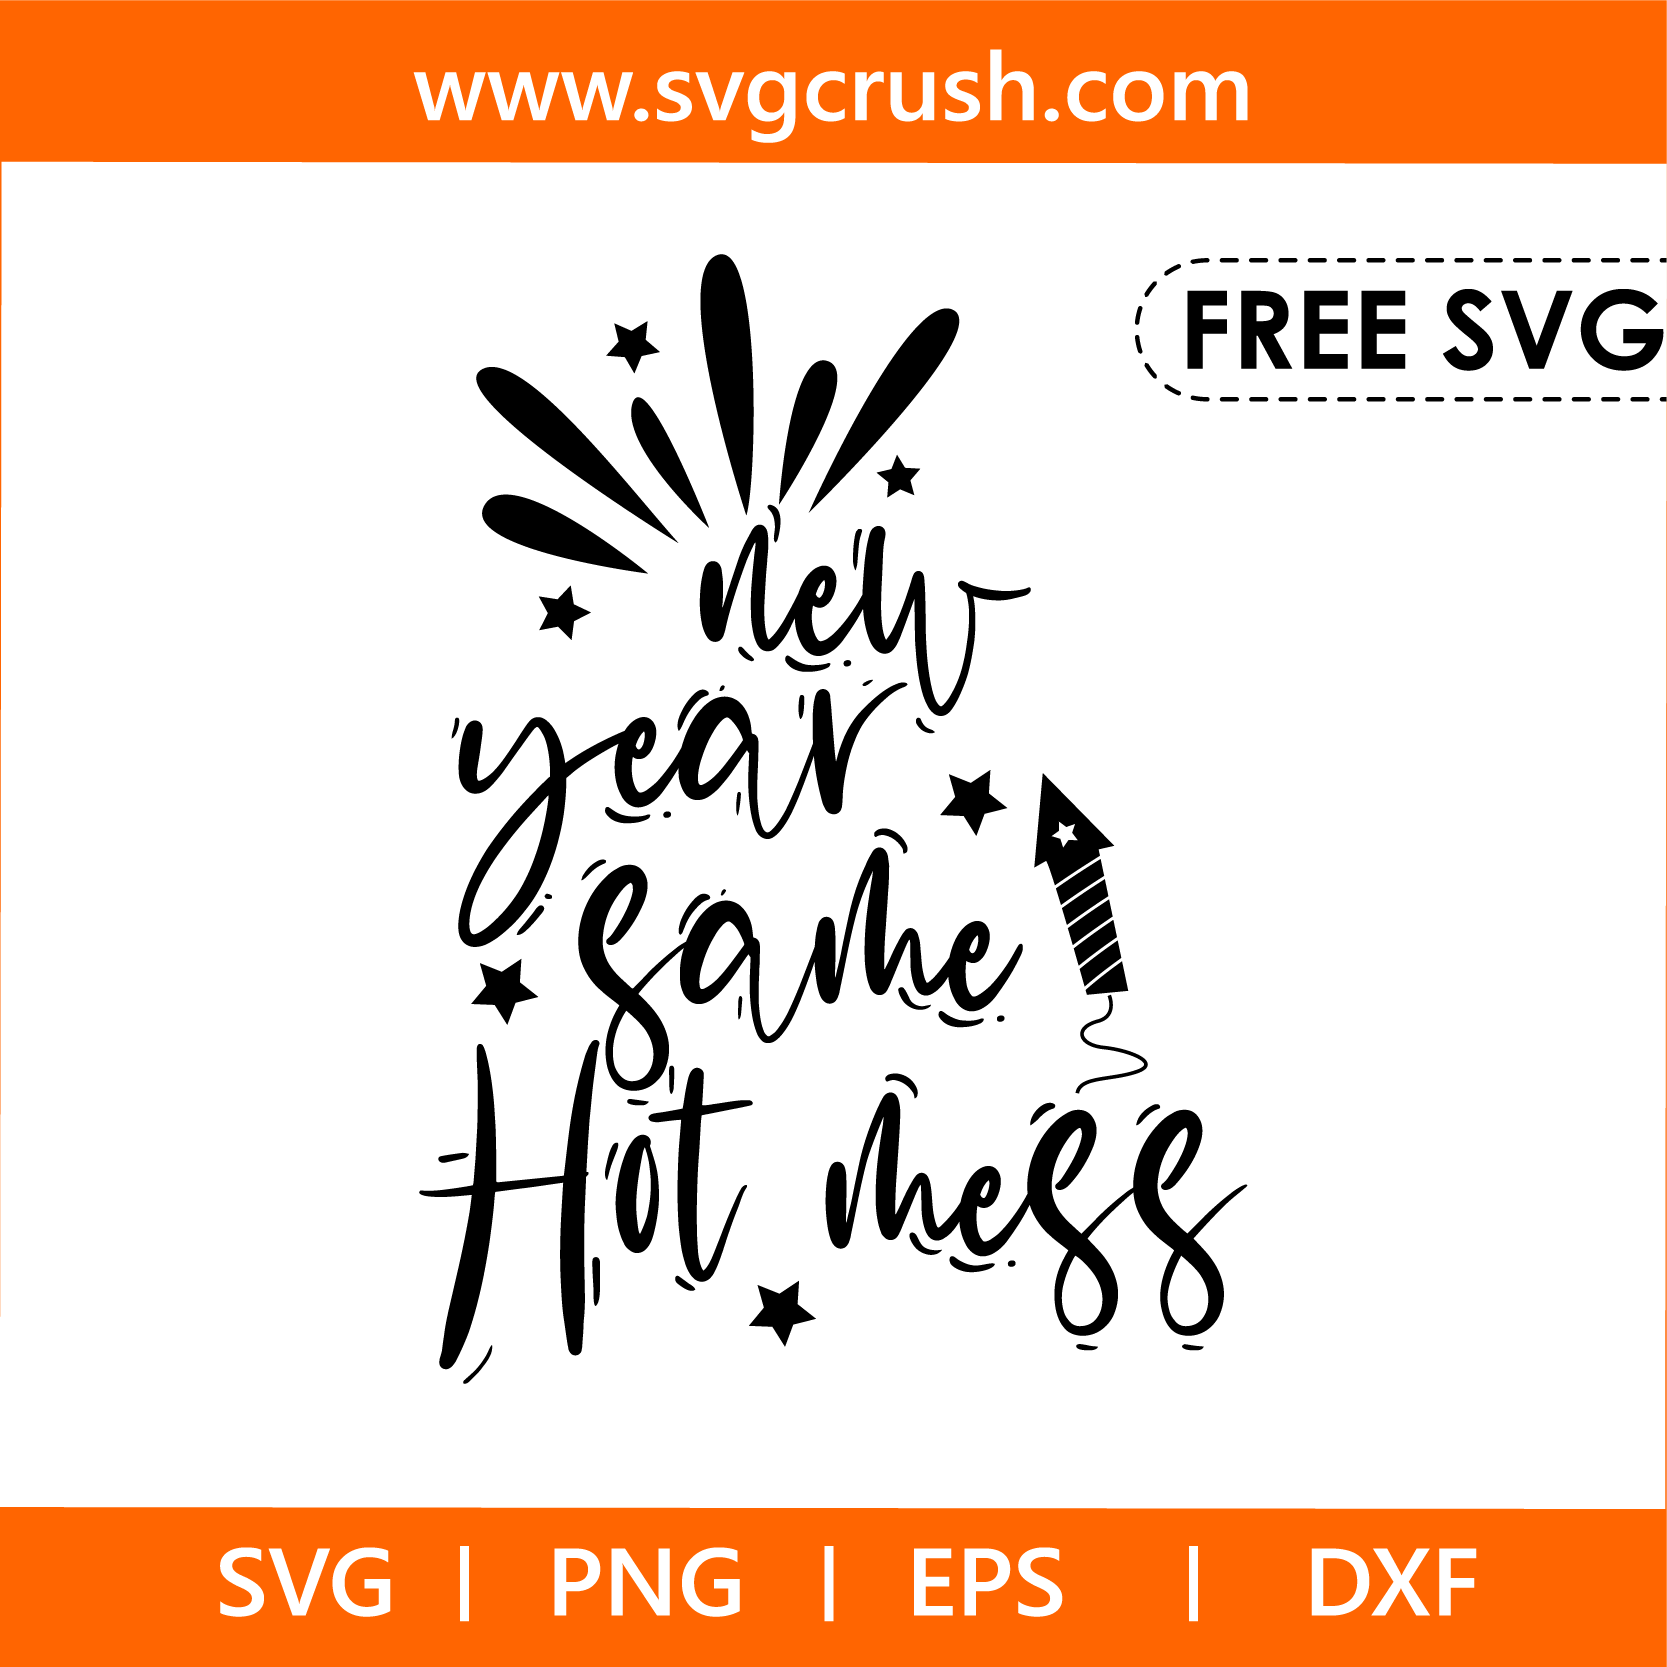 free new-year-same-mess-003 svg